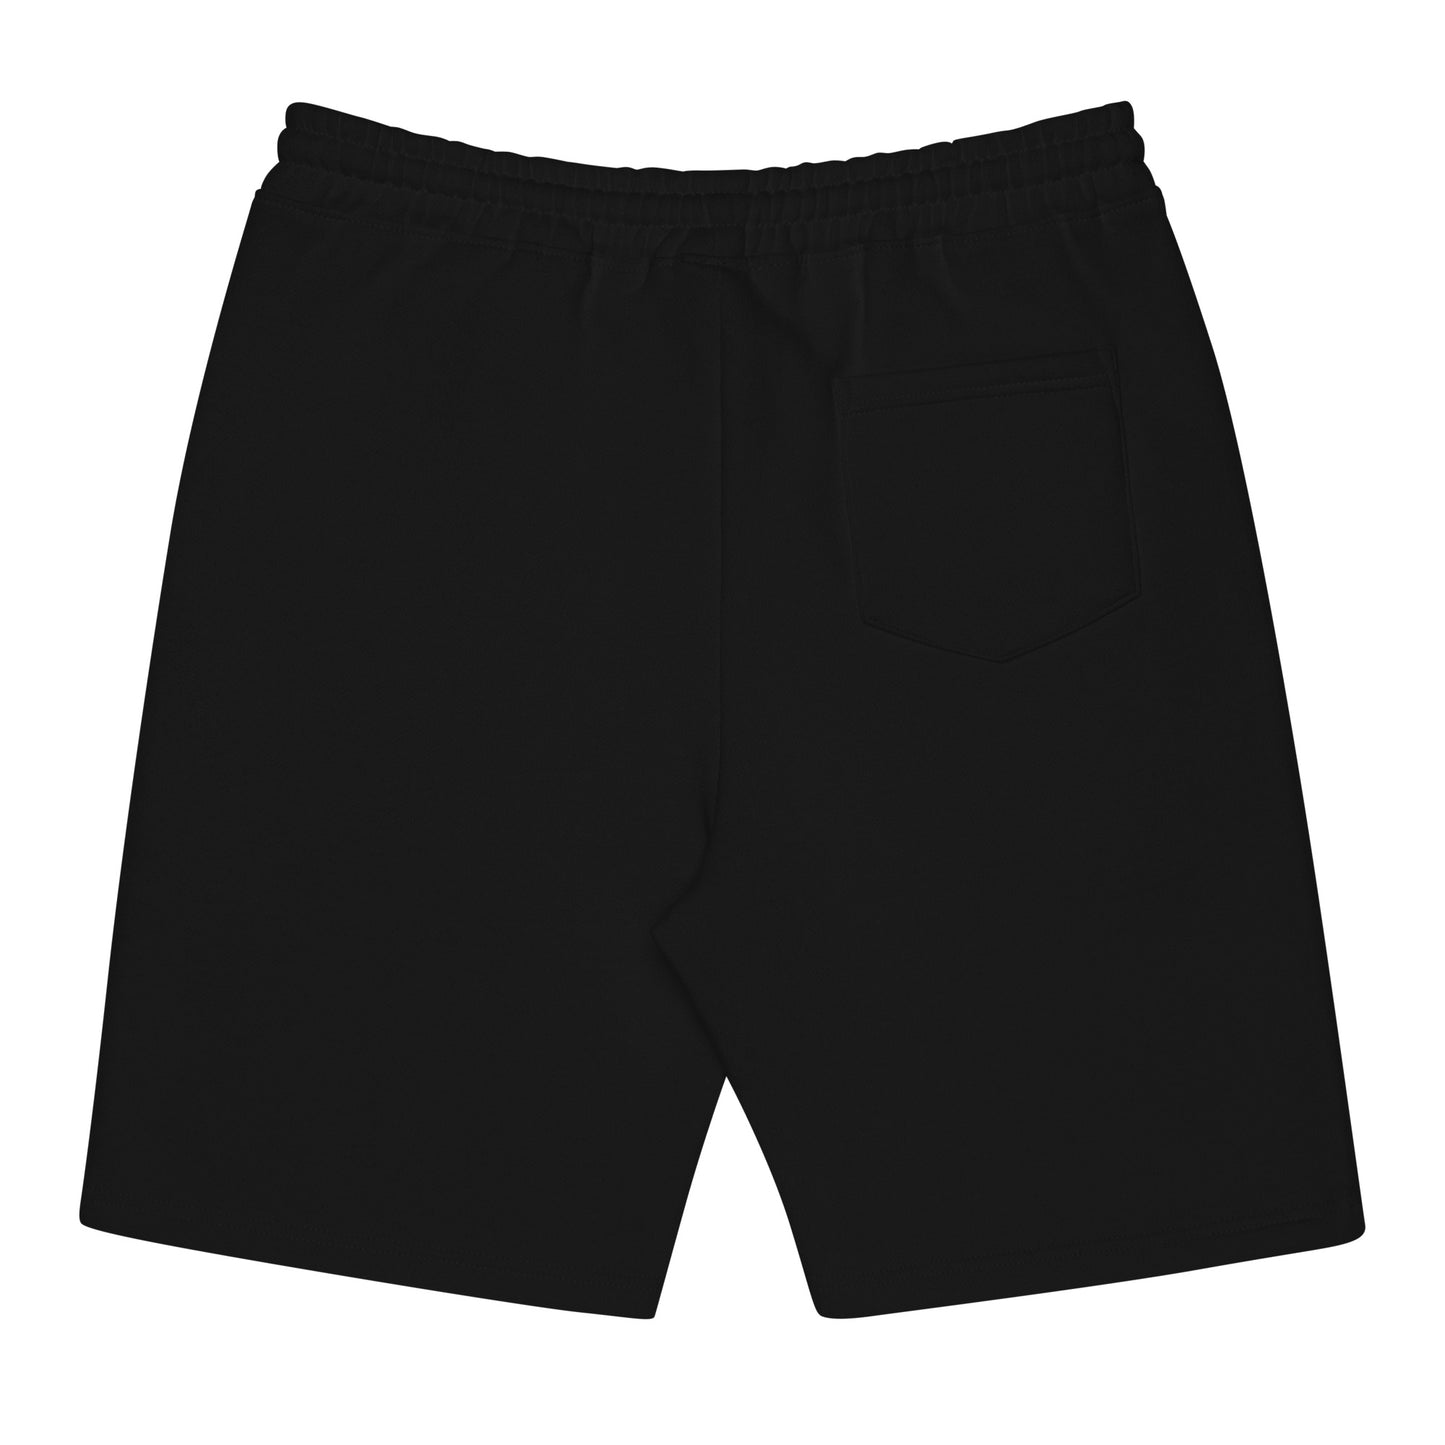 WeBearish Men's Fleece Shorts (Black)